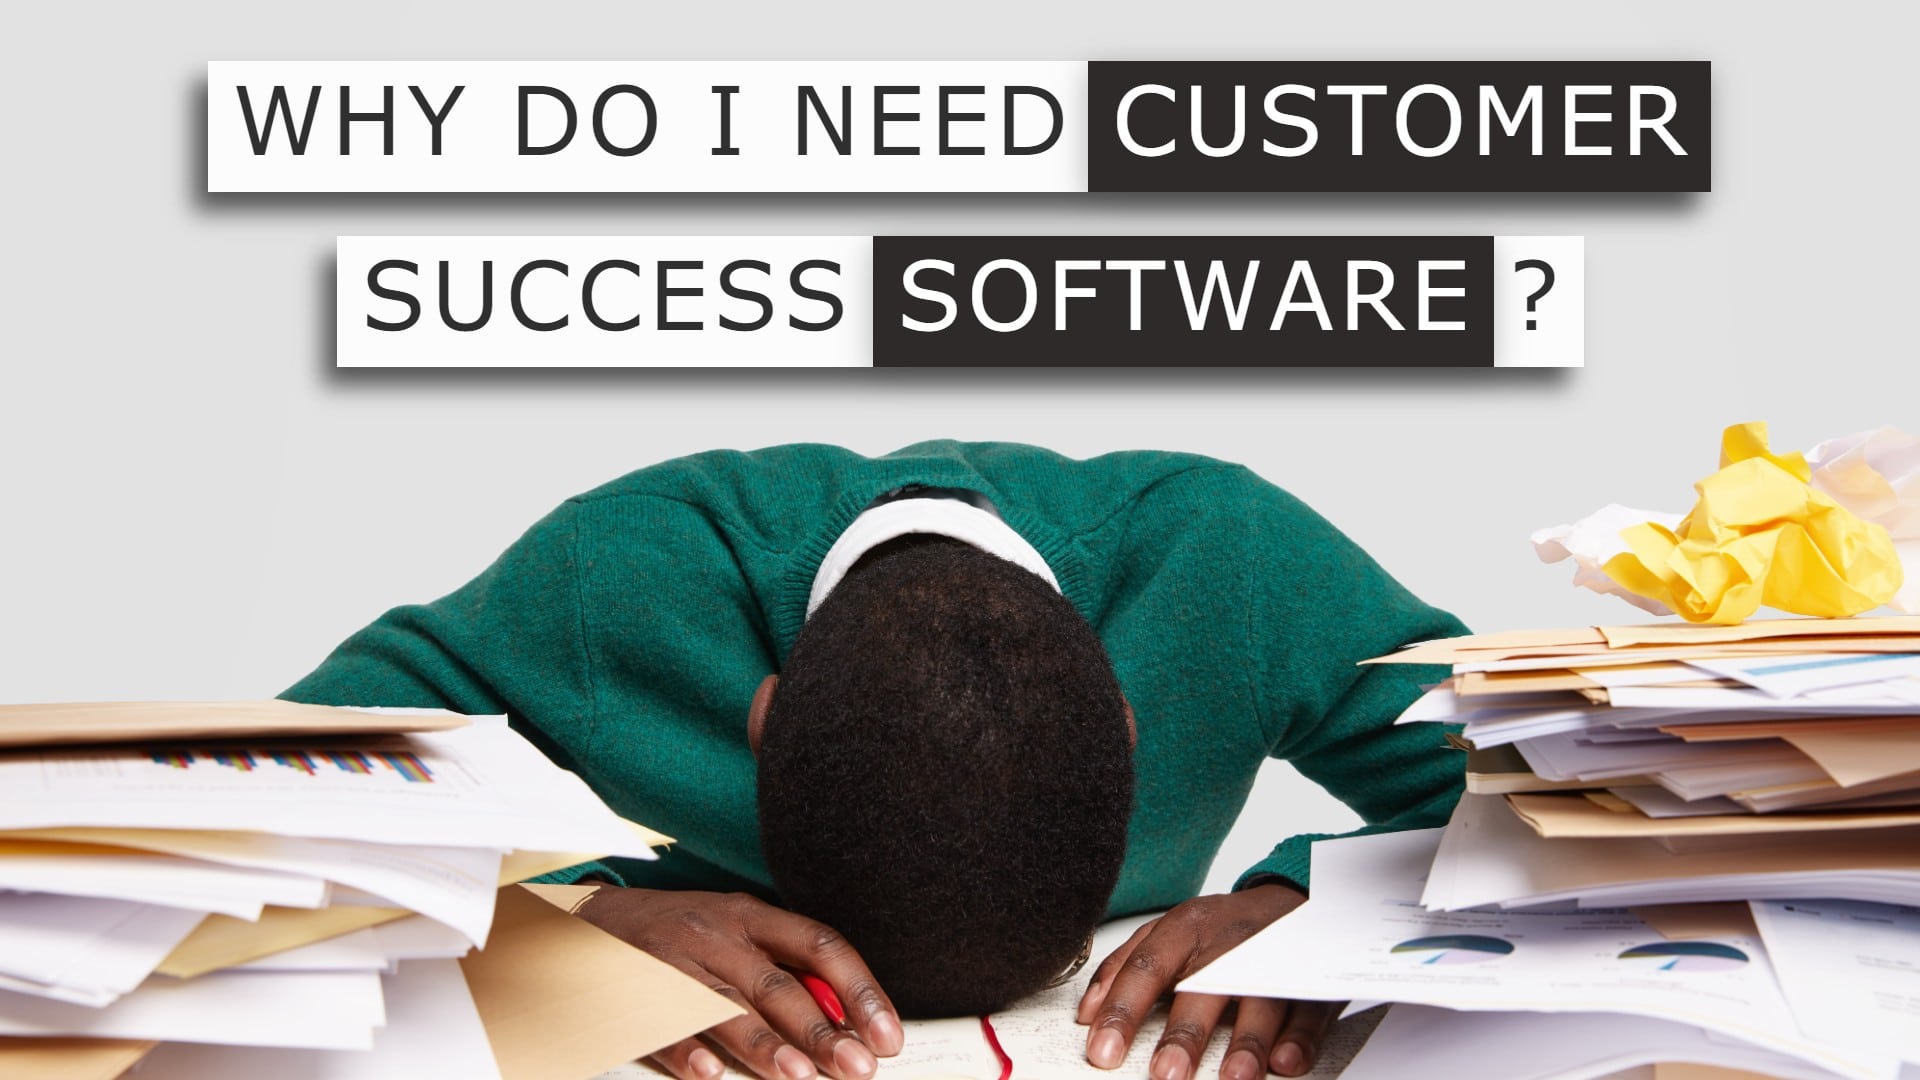 Why Do I Need Customer Success Software?